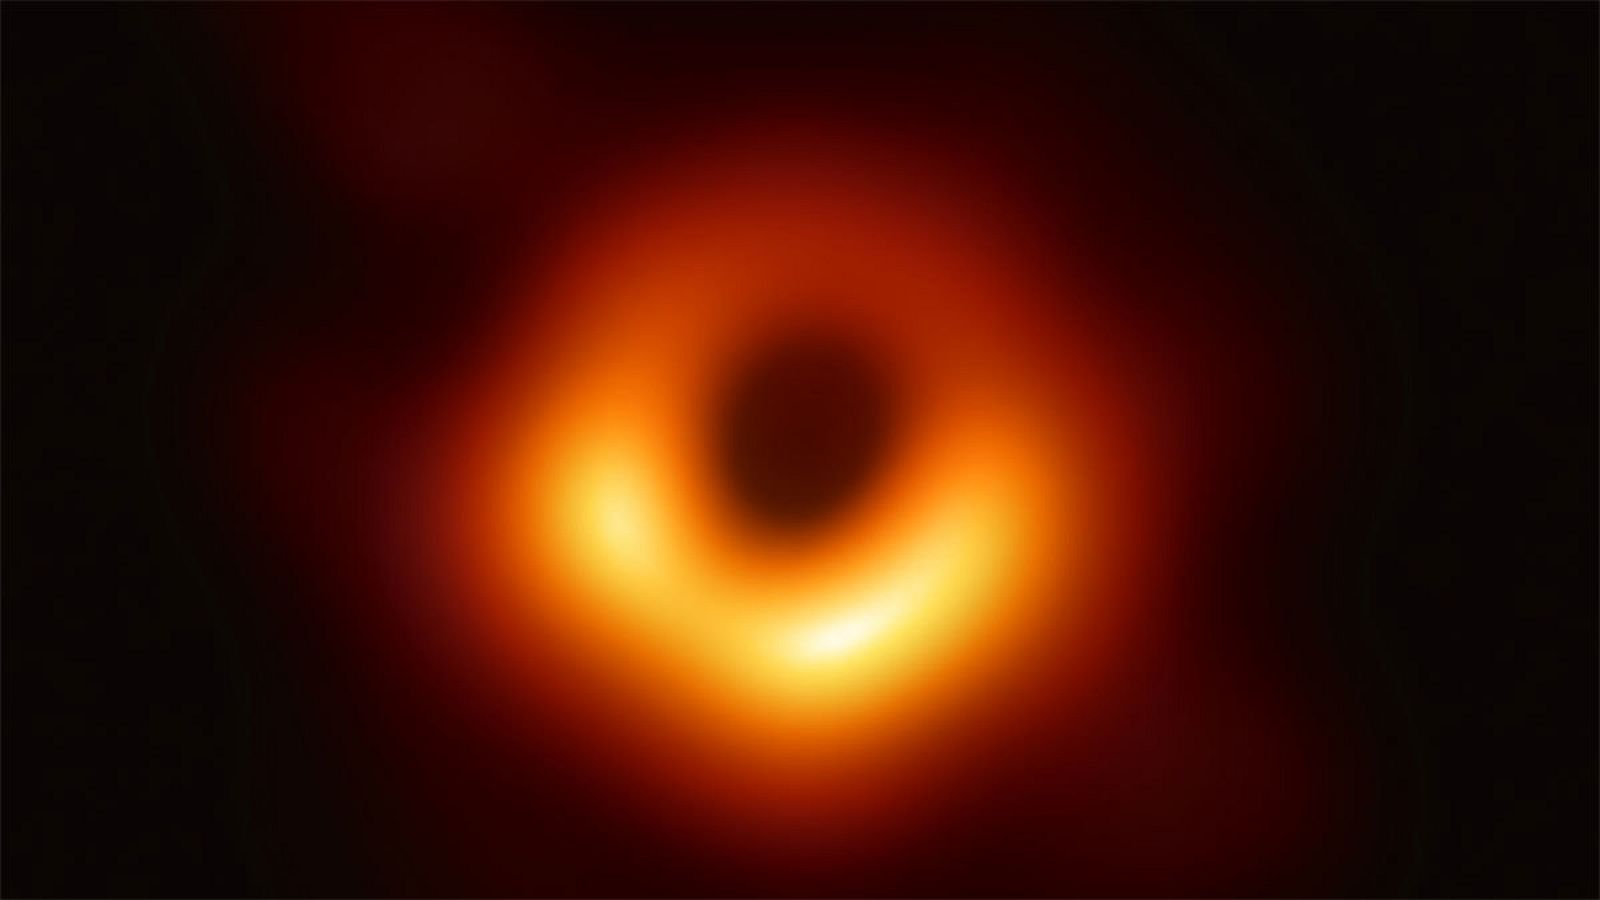 Primera imagen de un agujero negro supermasivo, obtenida por el Event Horizon Telescope (EHT).